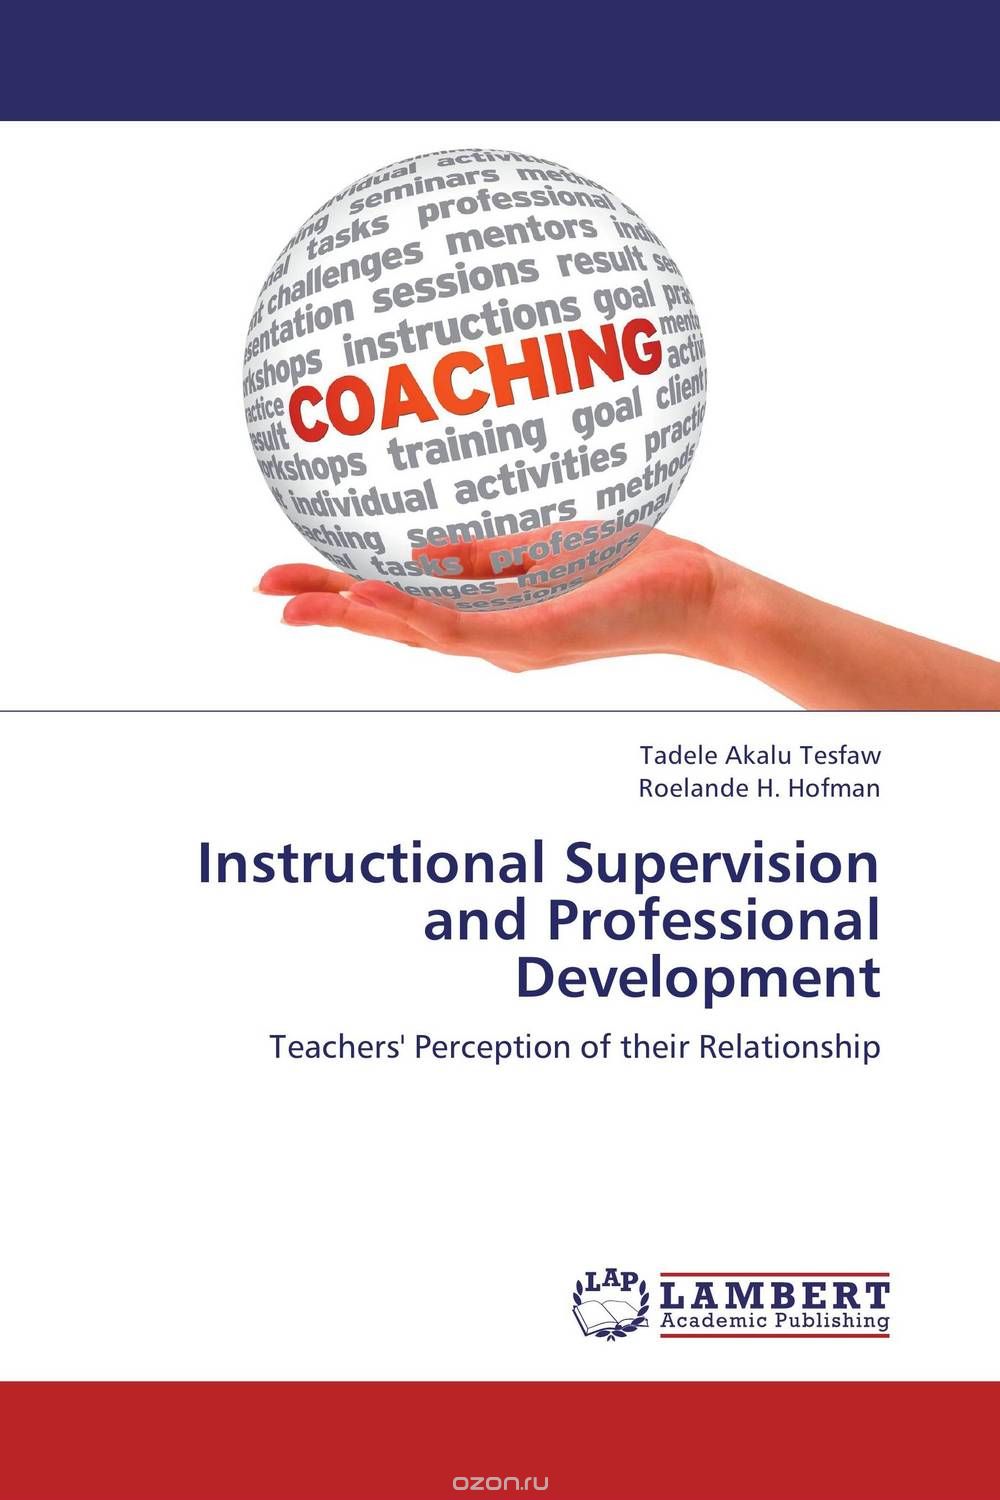 Скачать книгу "Instructional Supervision and Professional Development"